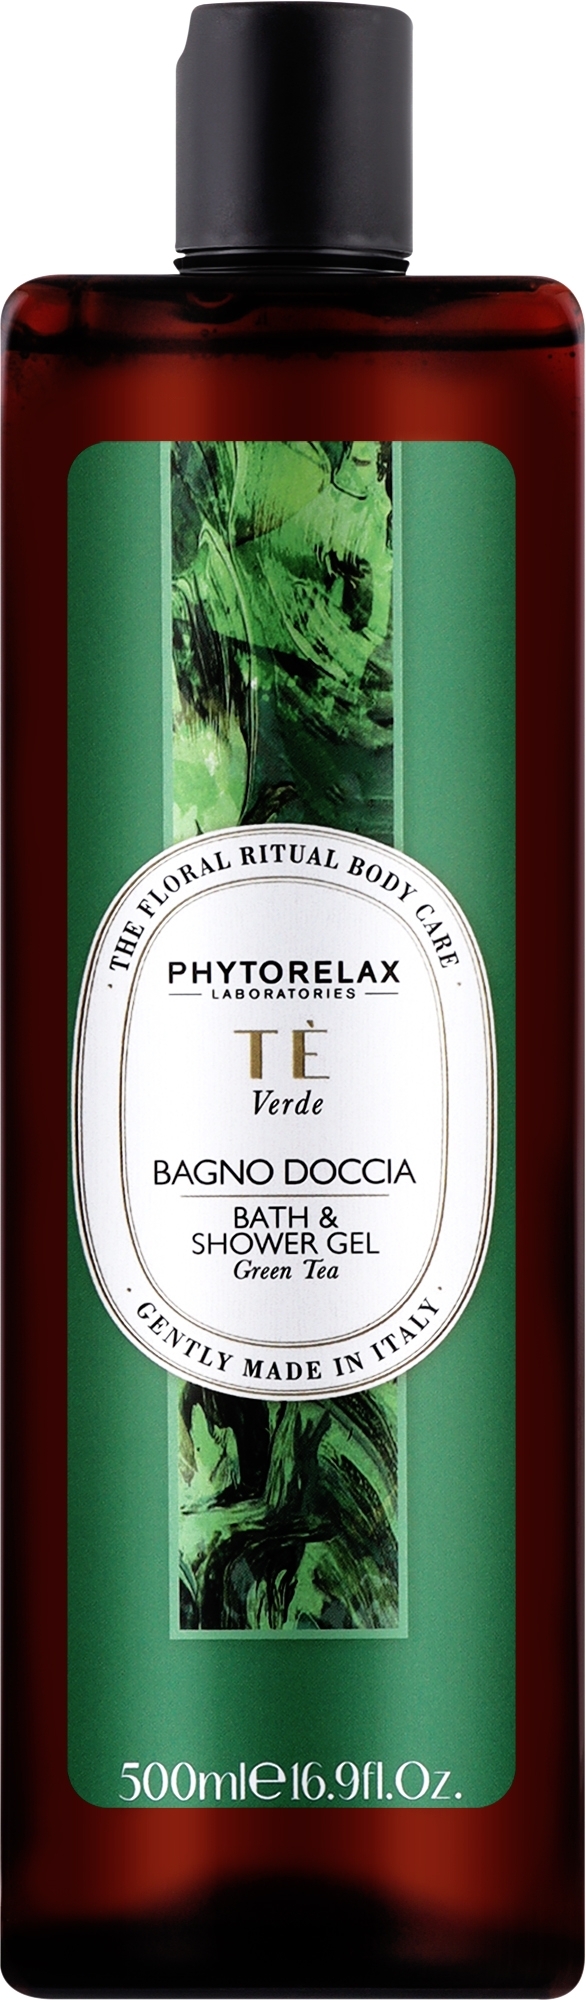 Гель для душа и ванны "Green Tea" - Phytorelax Laboratories Floral Ritual Bath & Shower Gel — фото 500ml